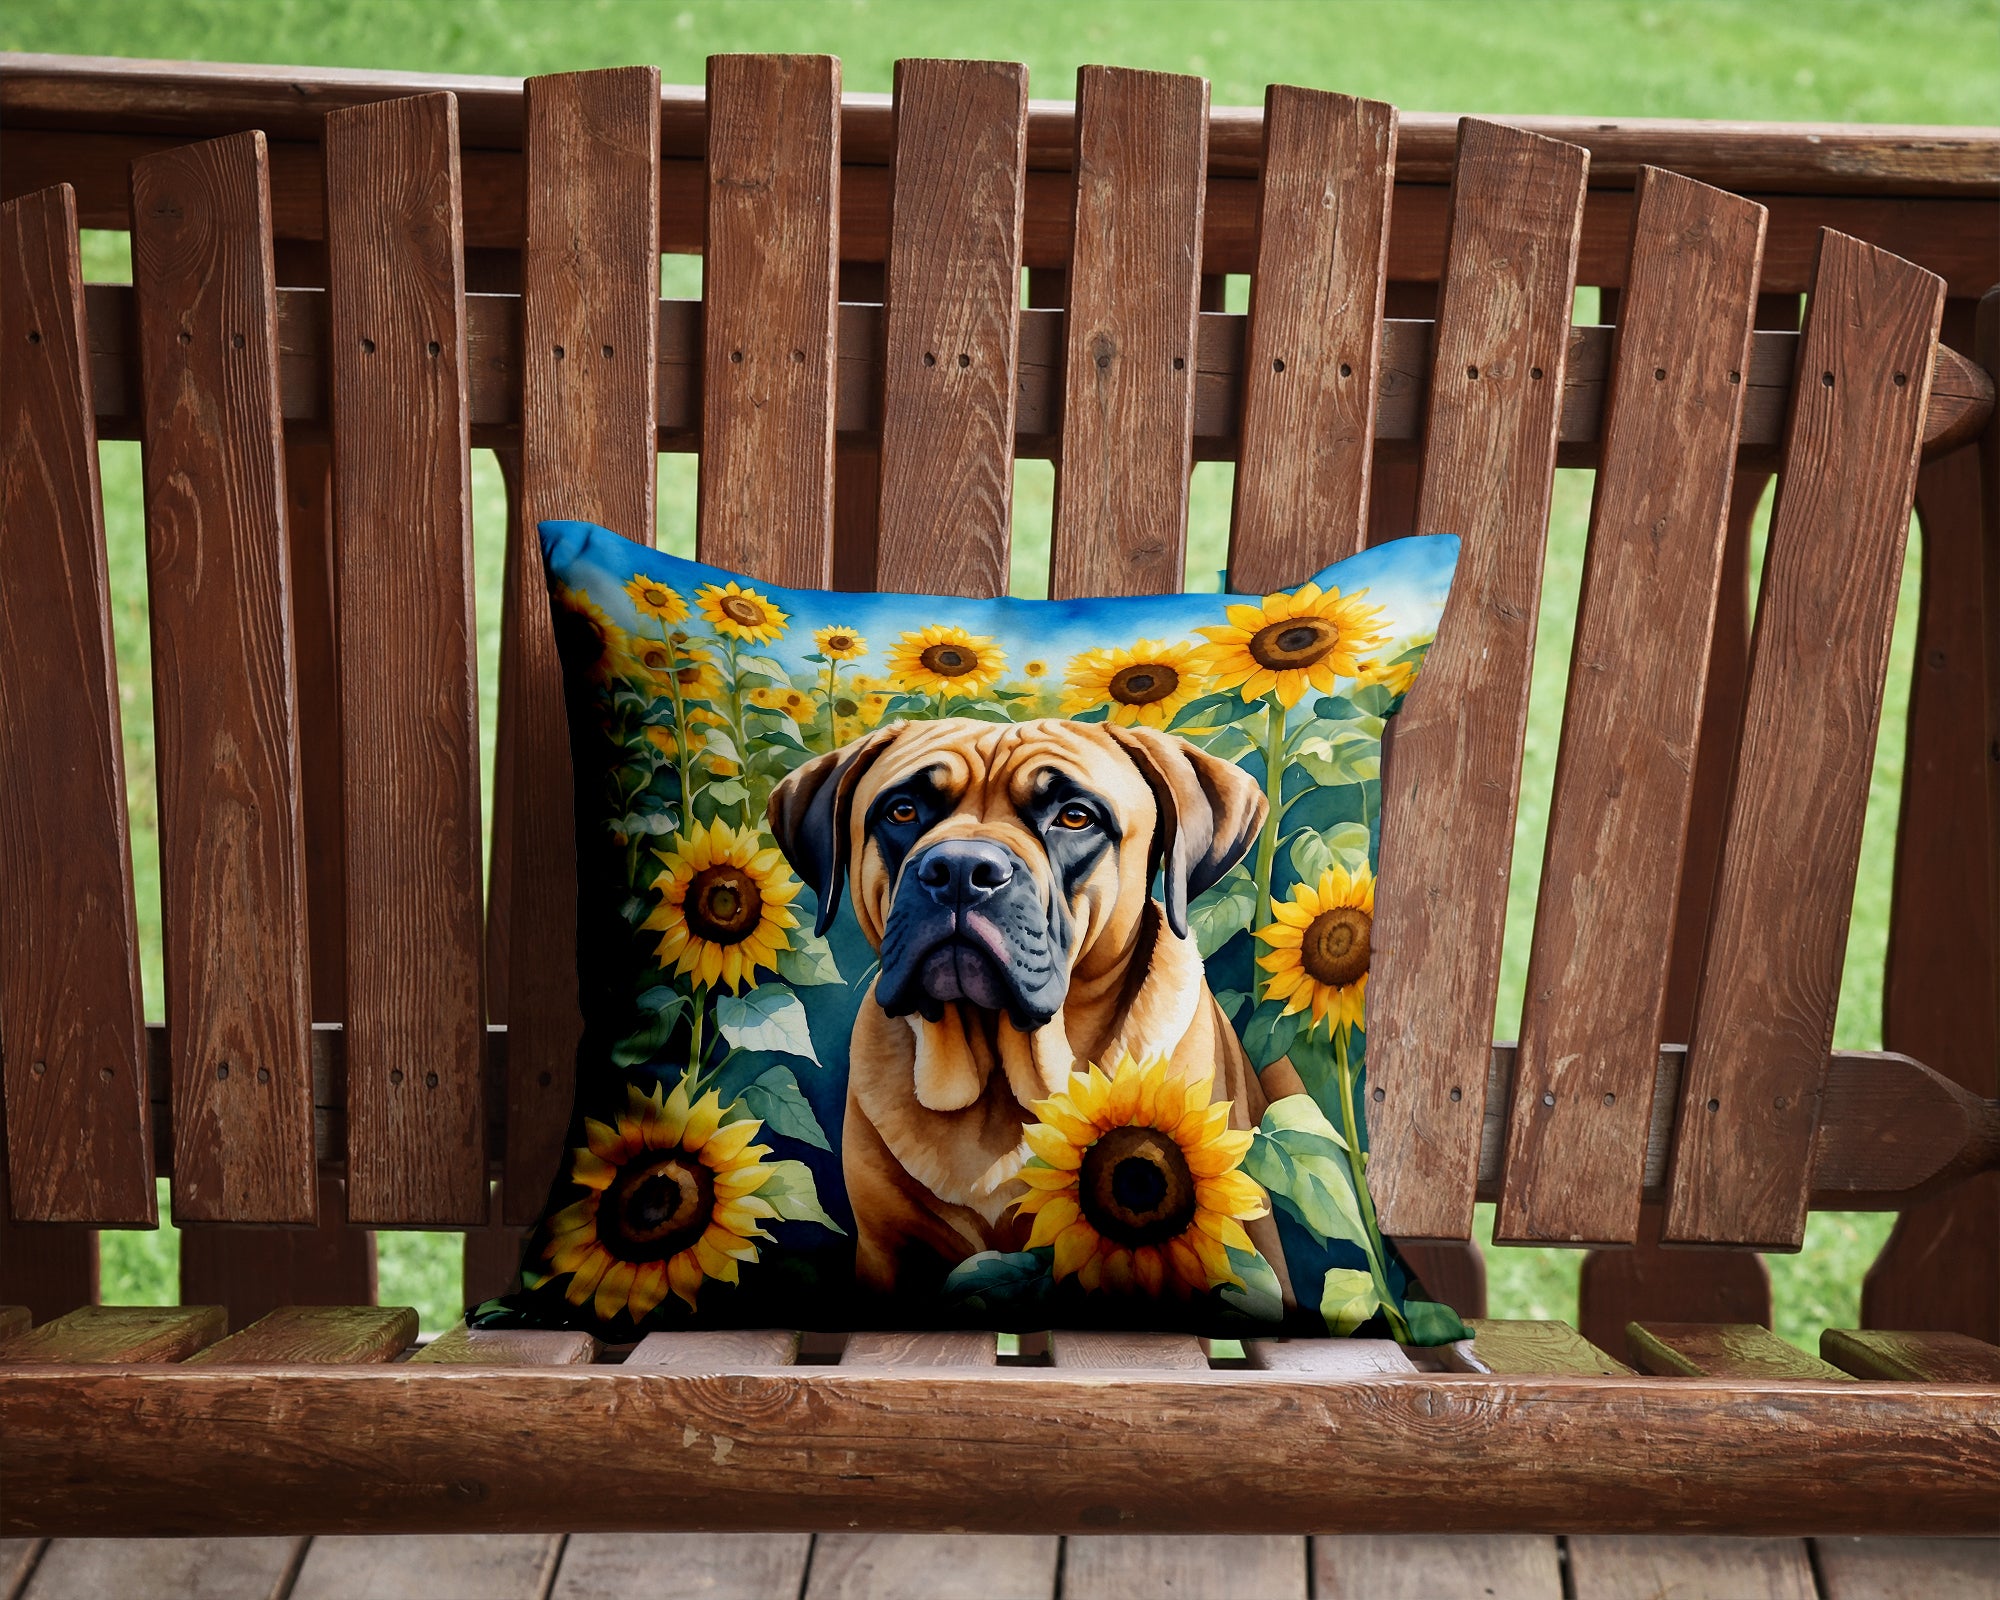 Buy this Mastiff in Sunflowers Throw Pillow